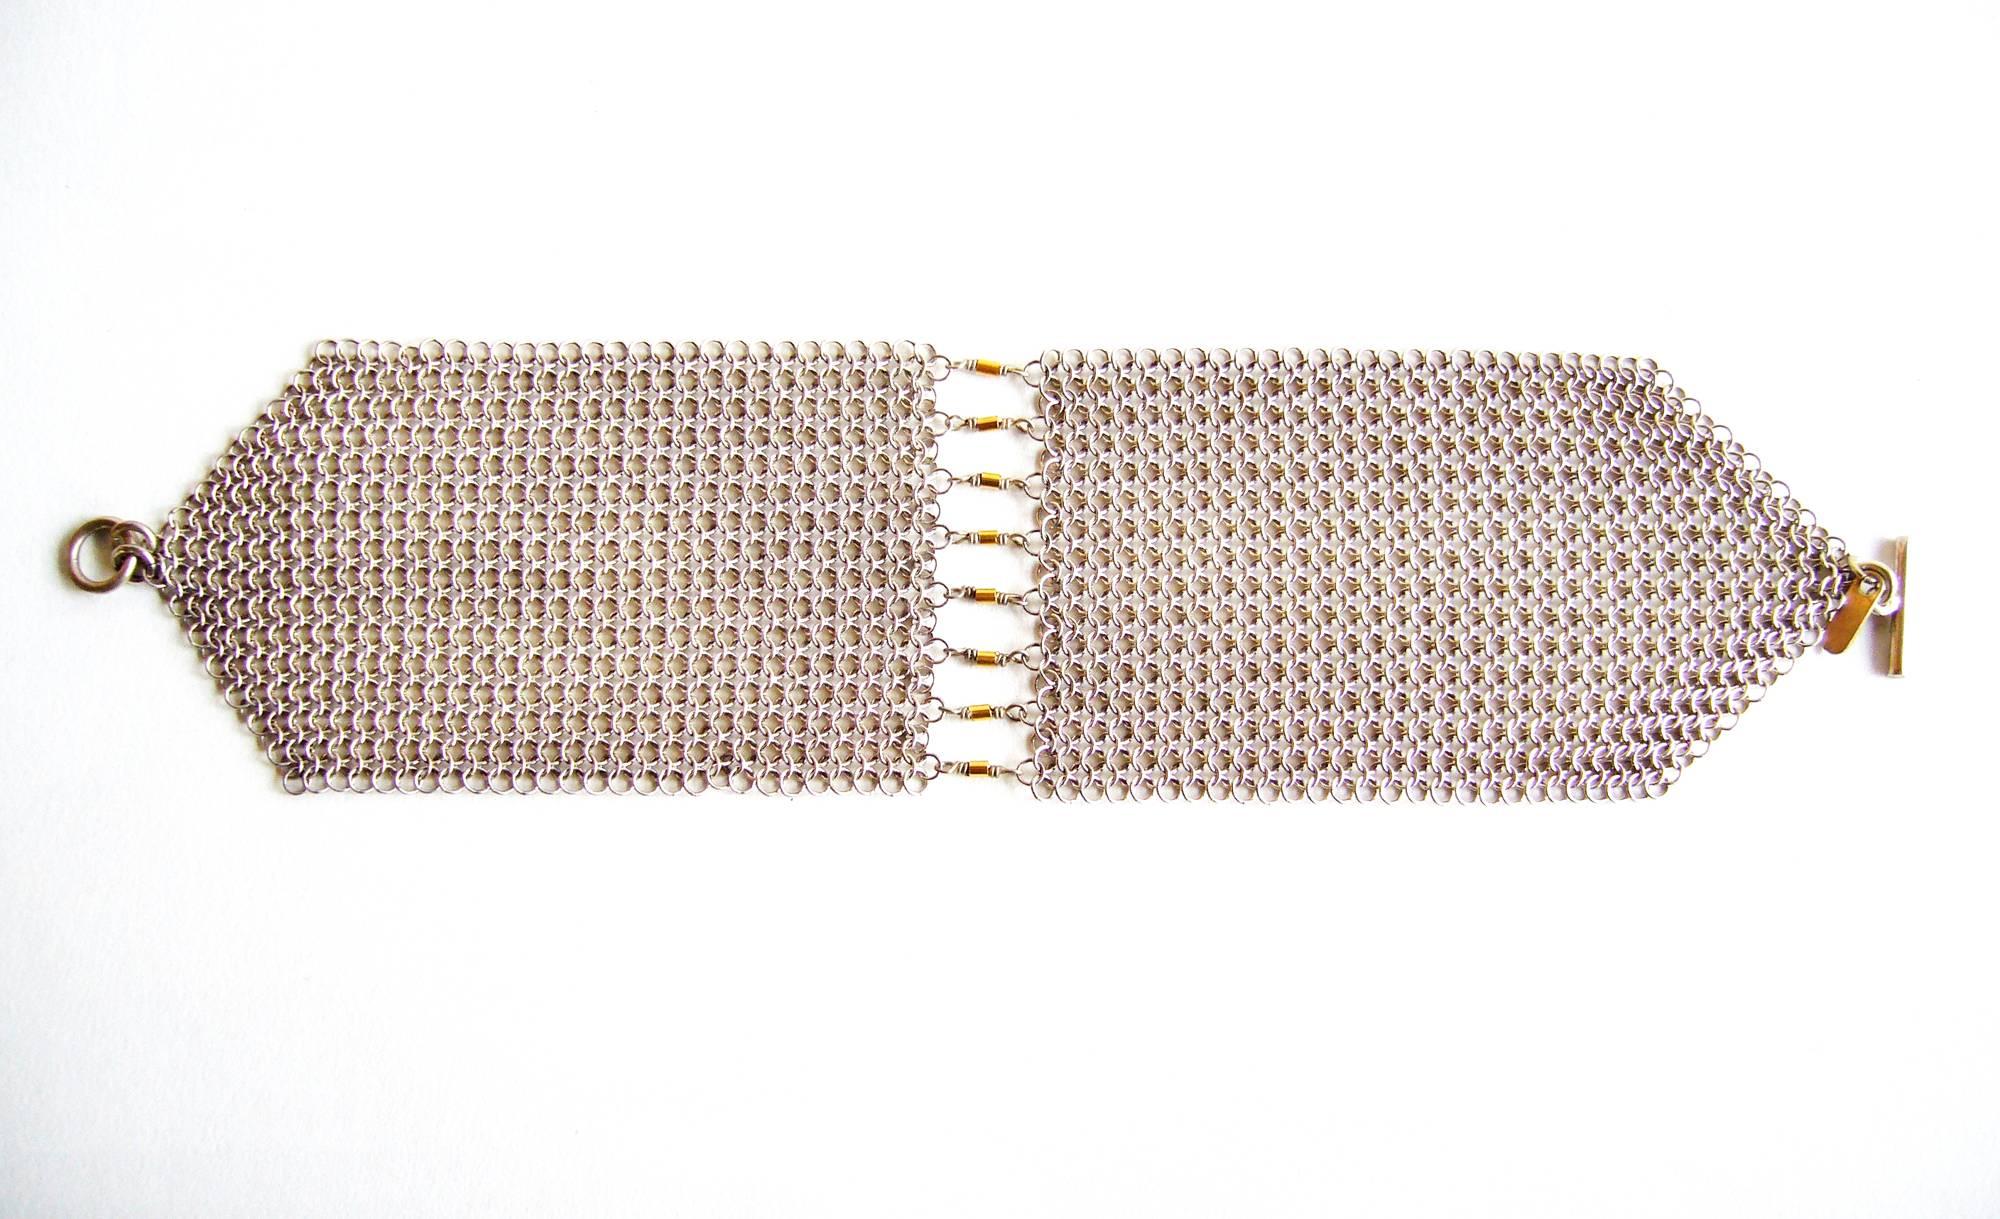 Allison Stern sterling silver chain maille mesh bracelet embellished with 18k gold accents at center.  Bracelet measures 6 1/2